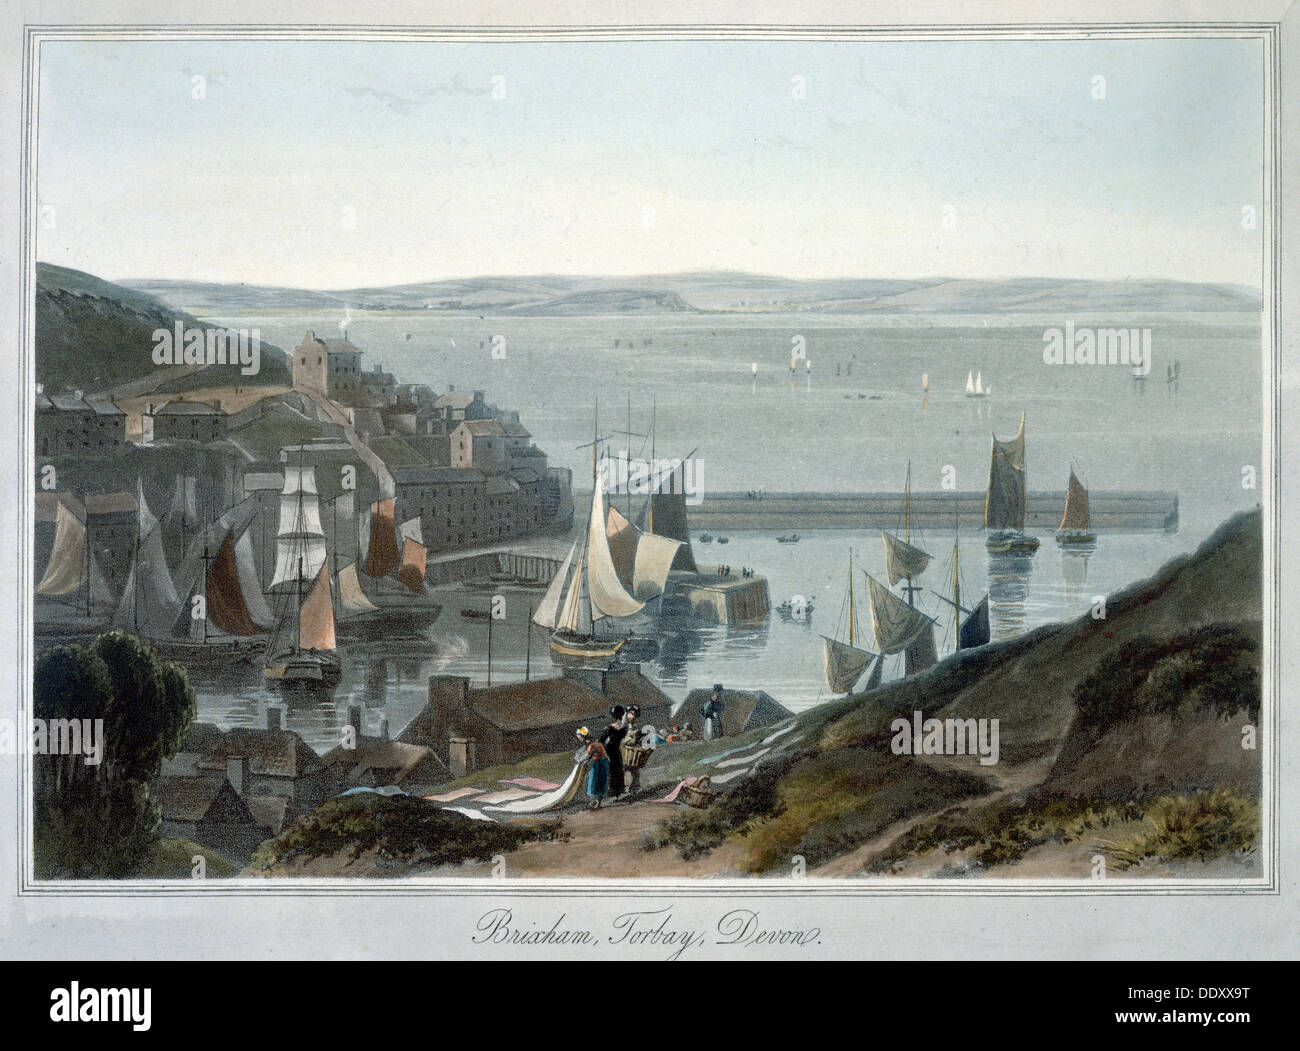 "Brixham, Torbay, Devon', 1825. Artista: William Daniell Foto Stock